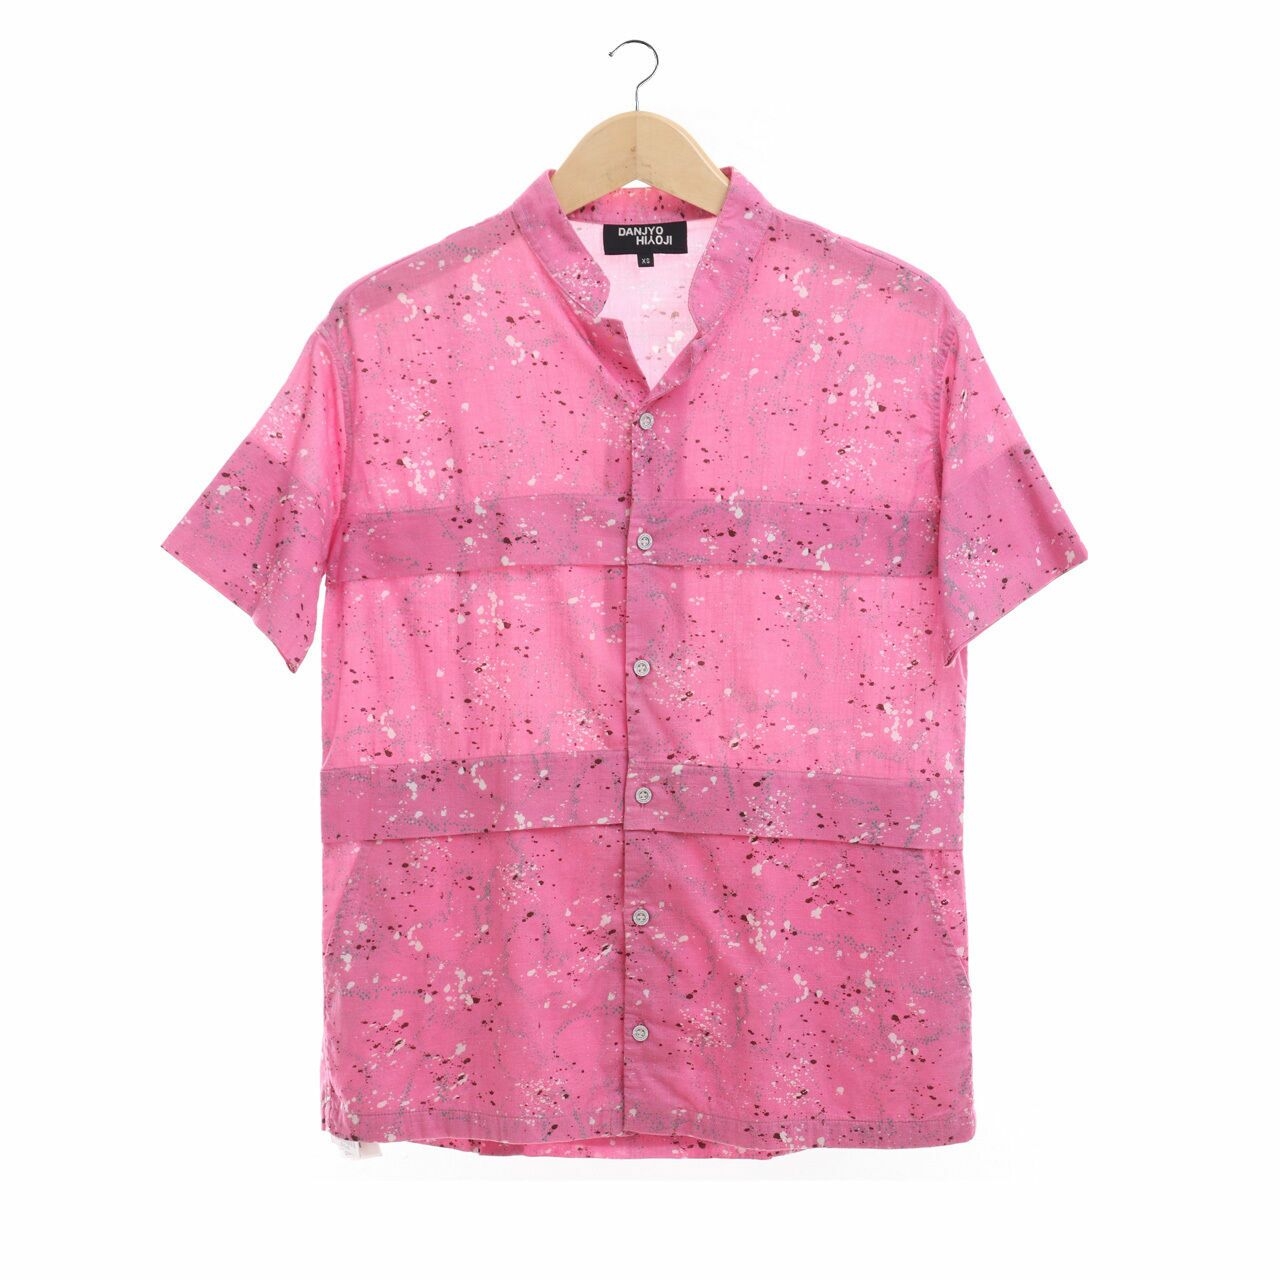 Danjyo Hiyoji Pink Patterned Shirt